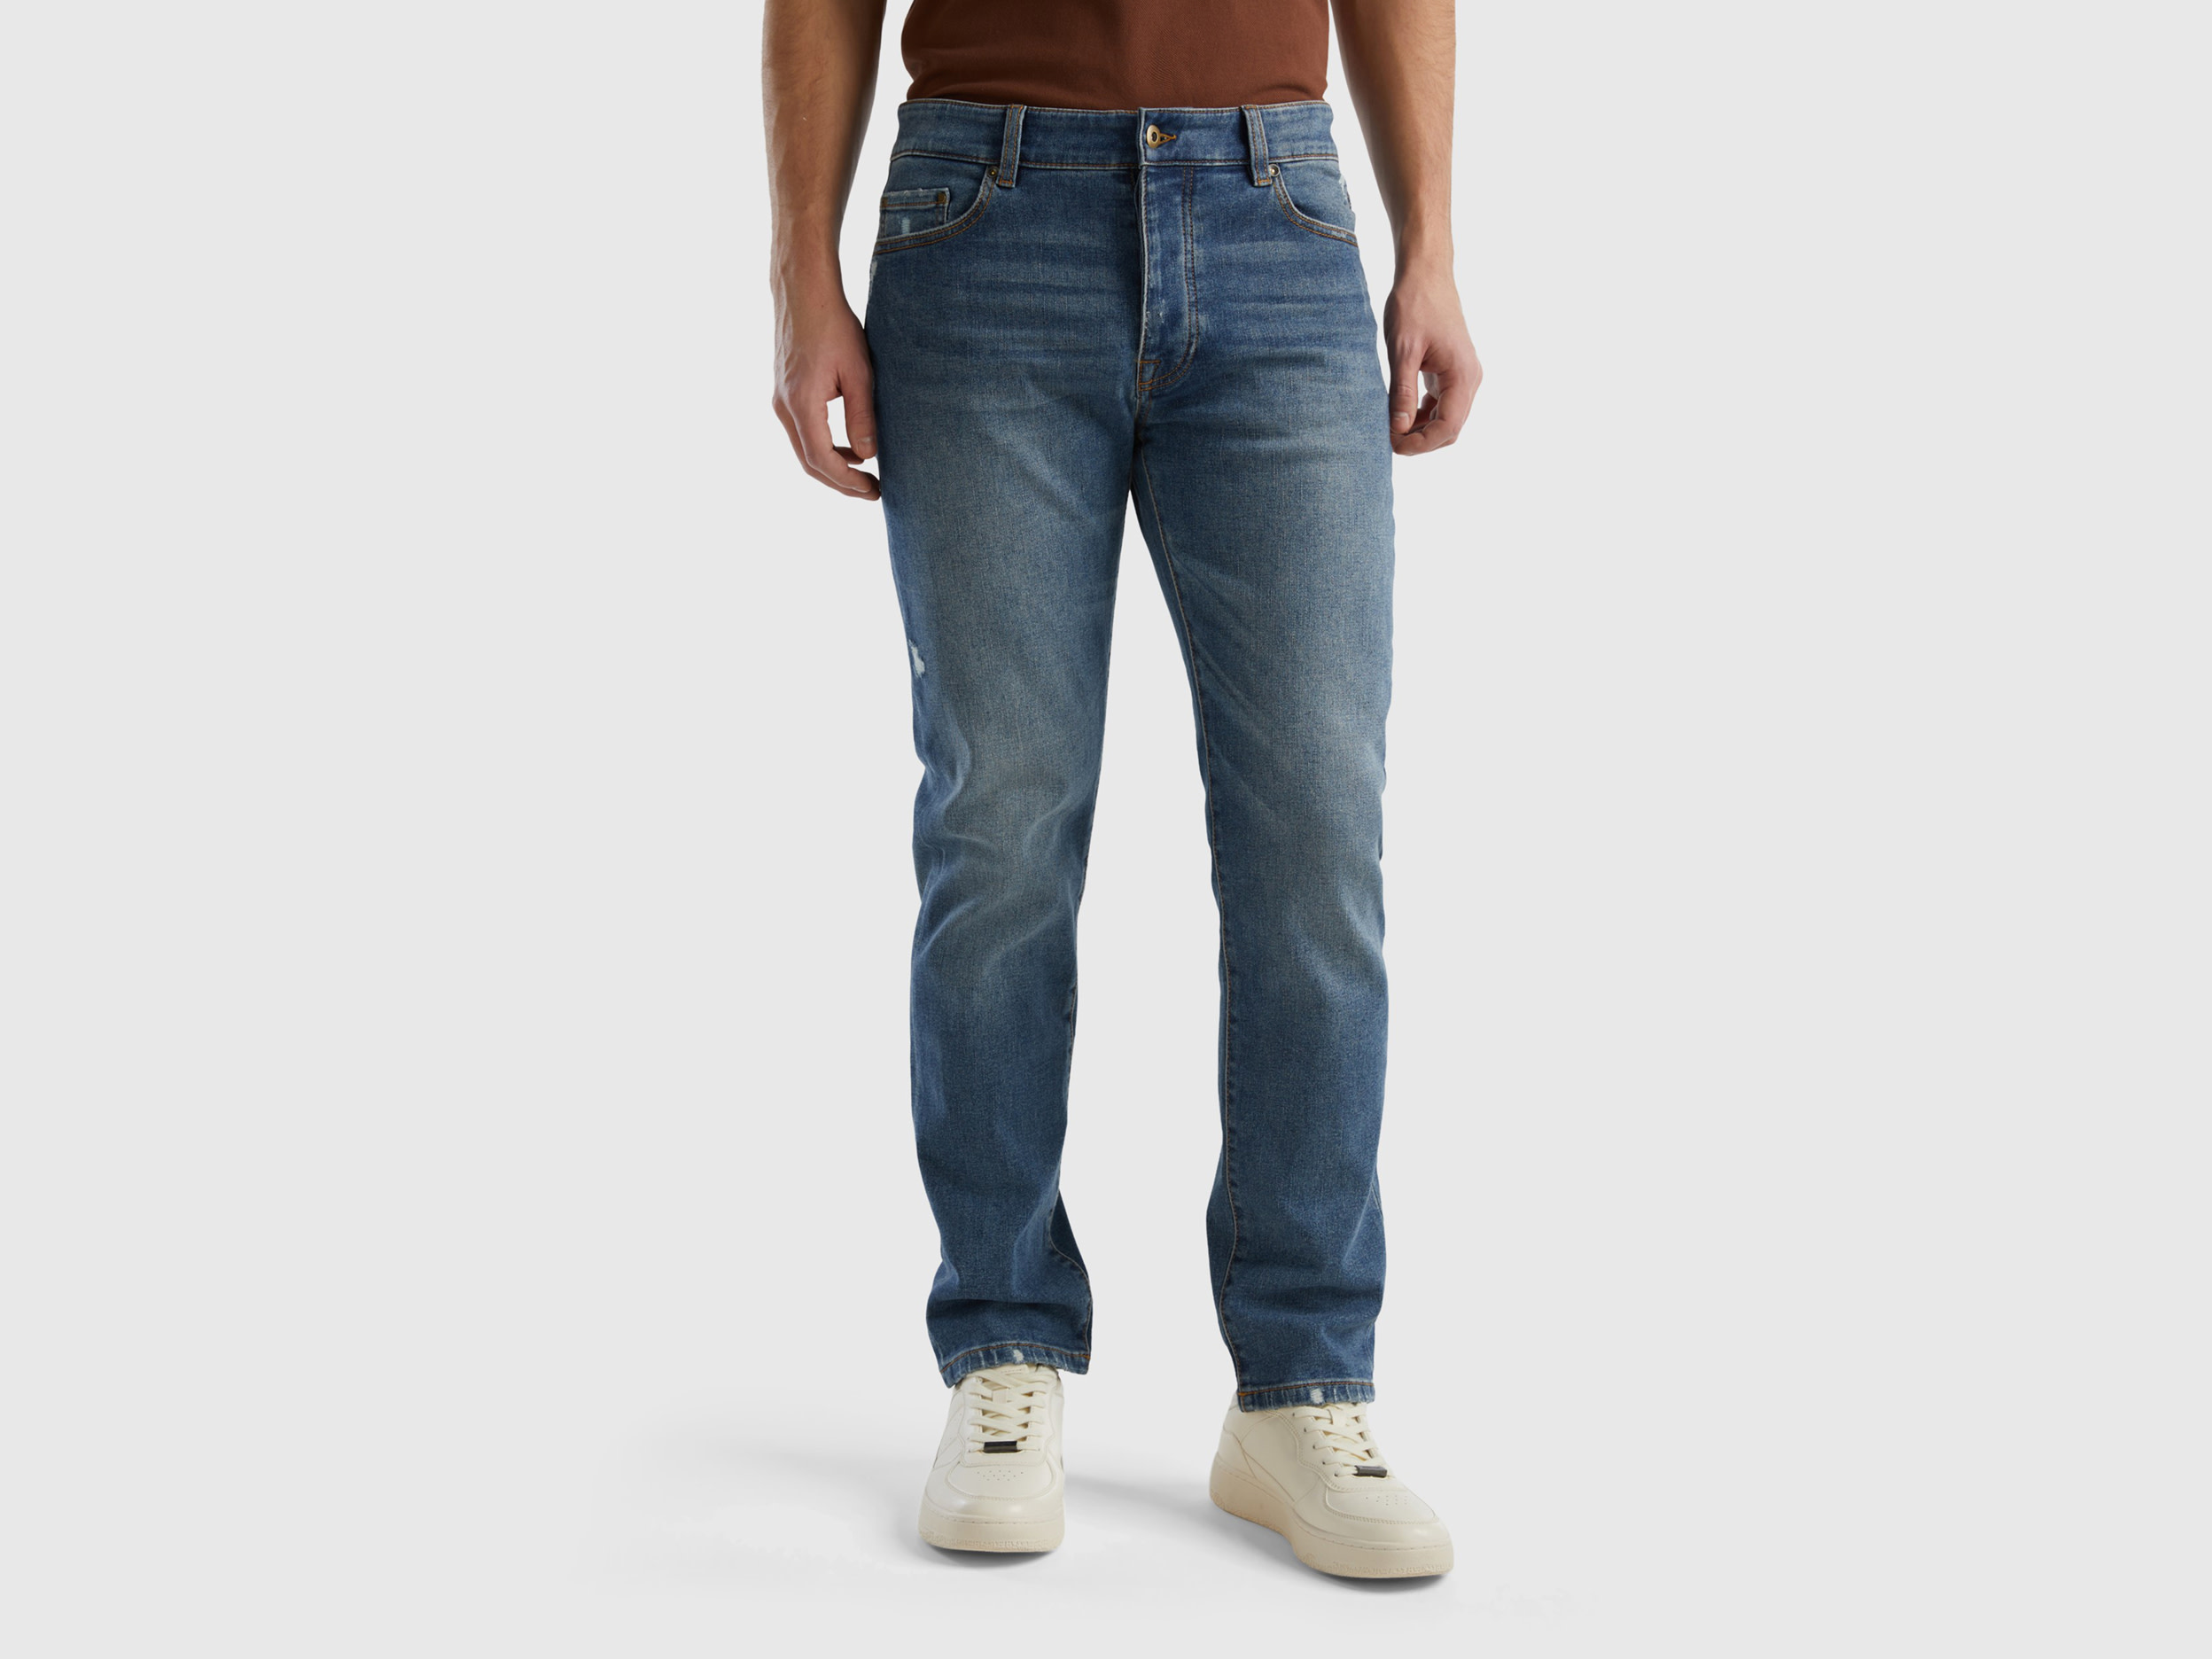 Benetton, Five Pocket Slim Fit Jeans, size 31, Dark Blue, Men